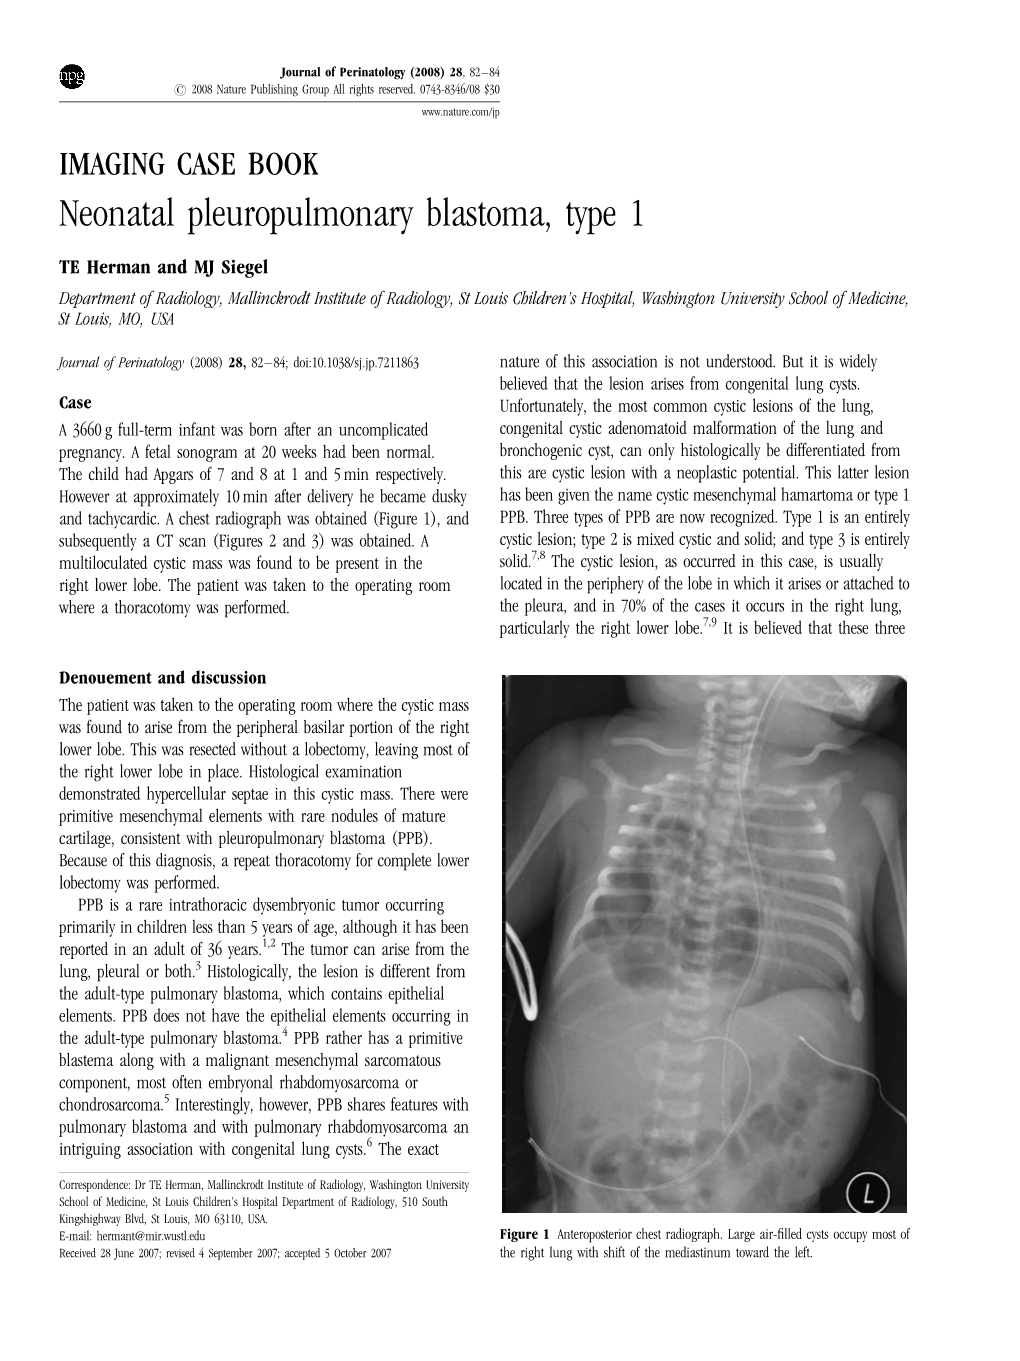 Neonatal Pleuropulmonary Blastoma, Type 1